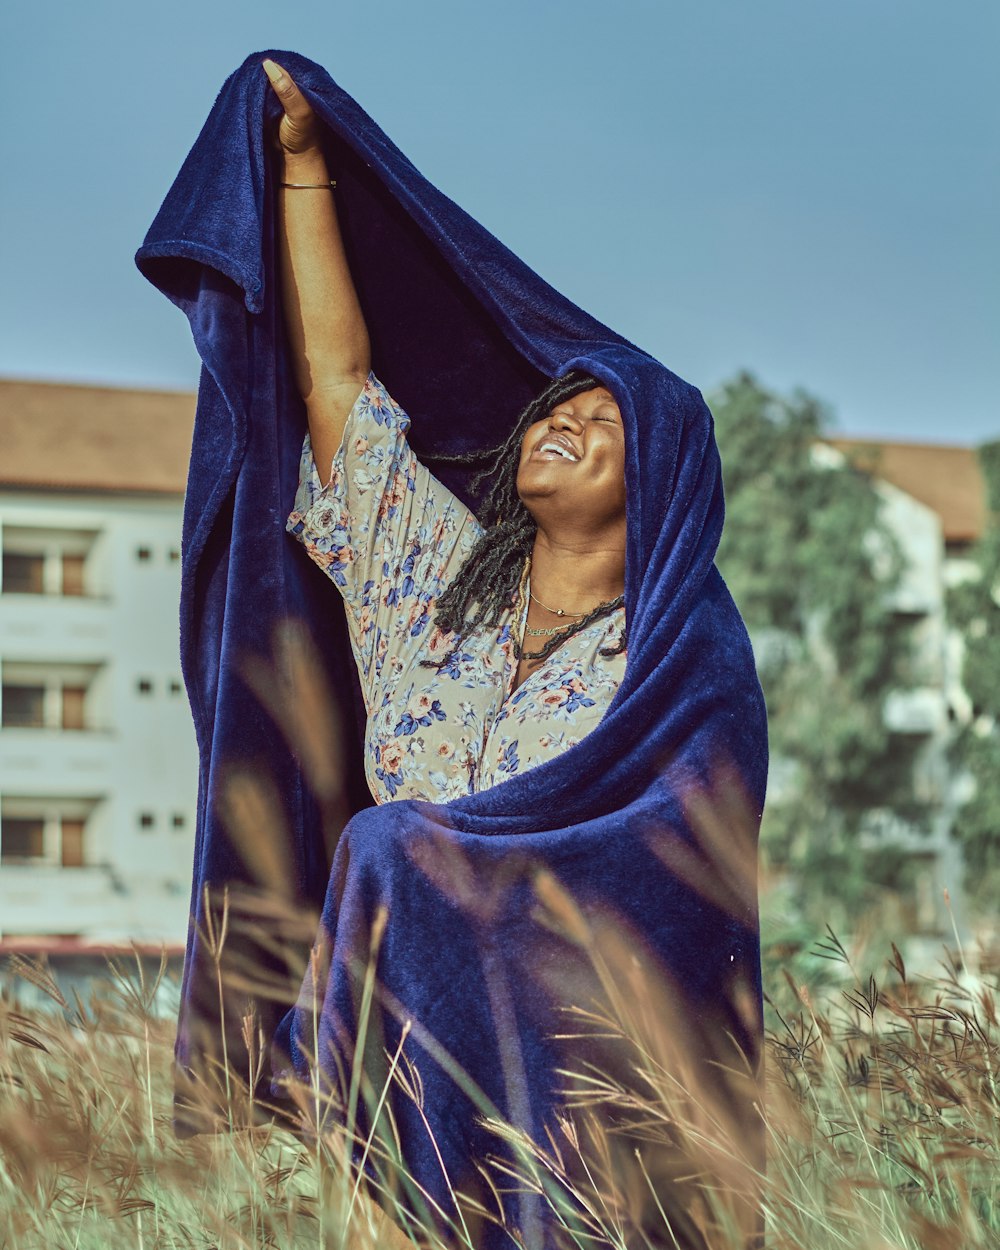 Frau im blauen Hijab steht tagsüber auf grünem Rasen